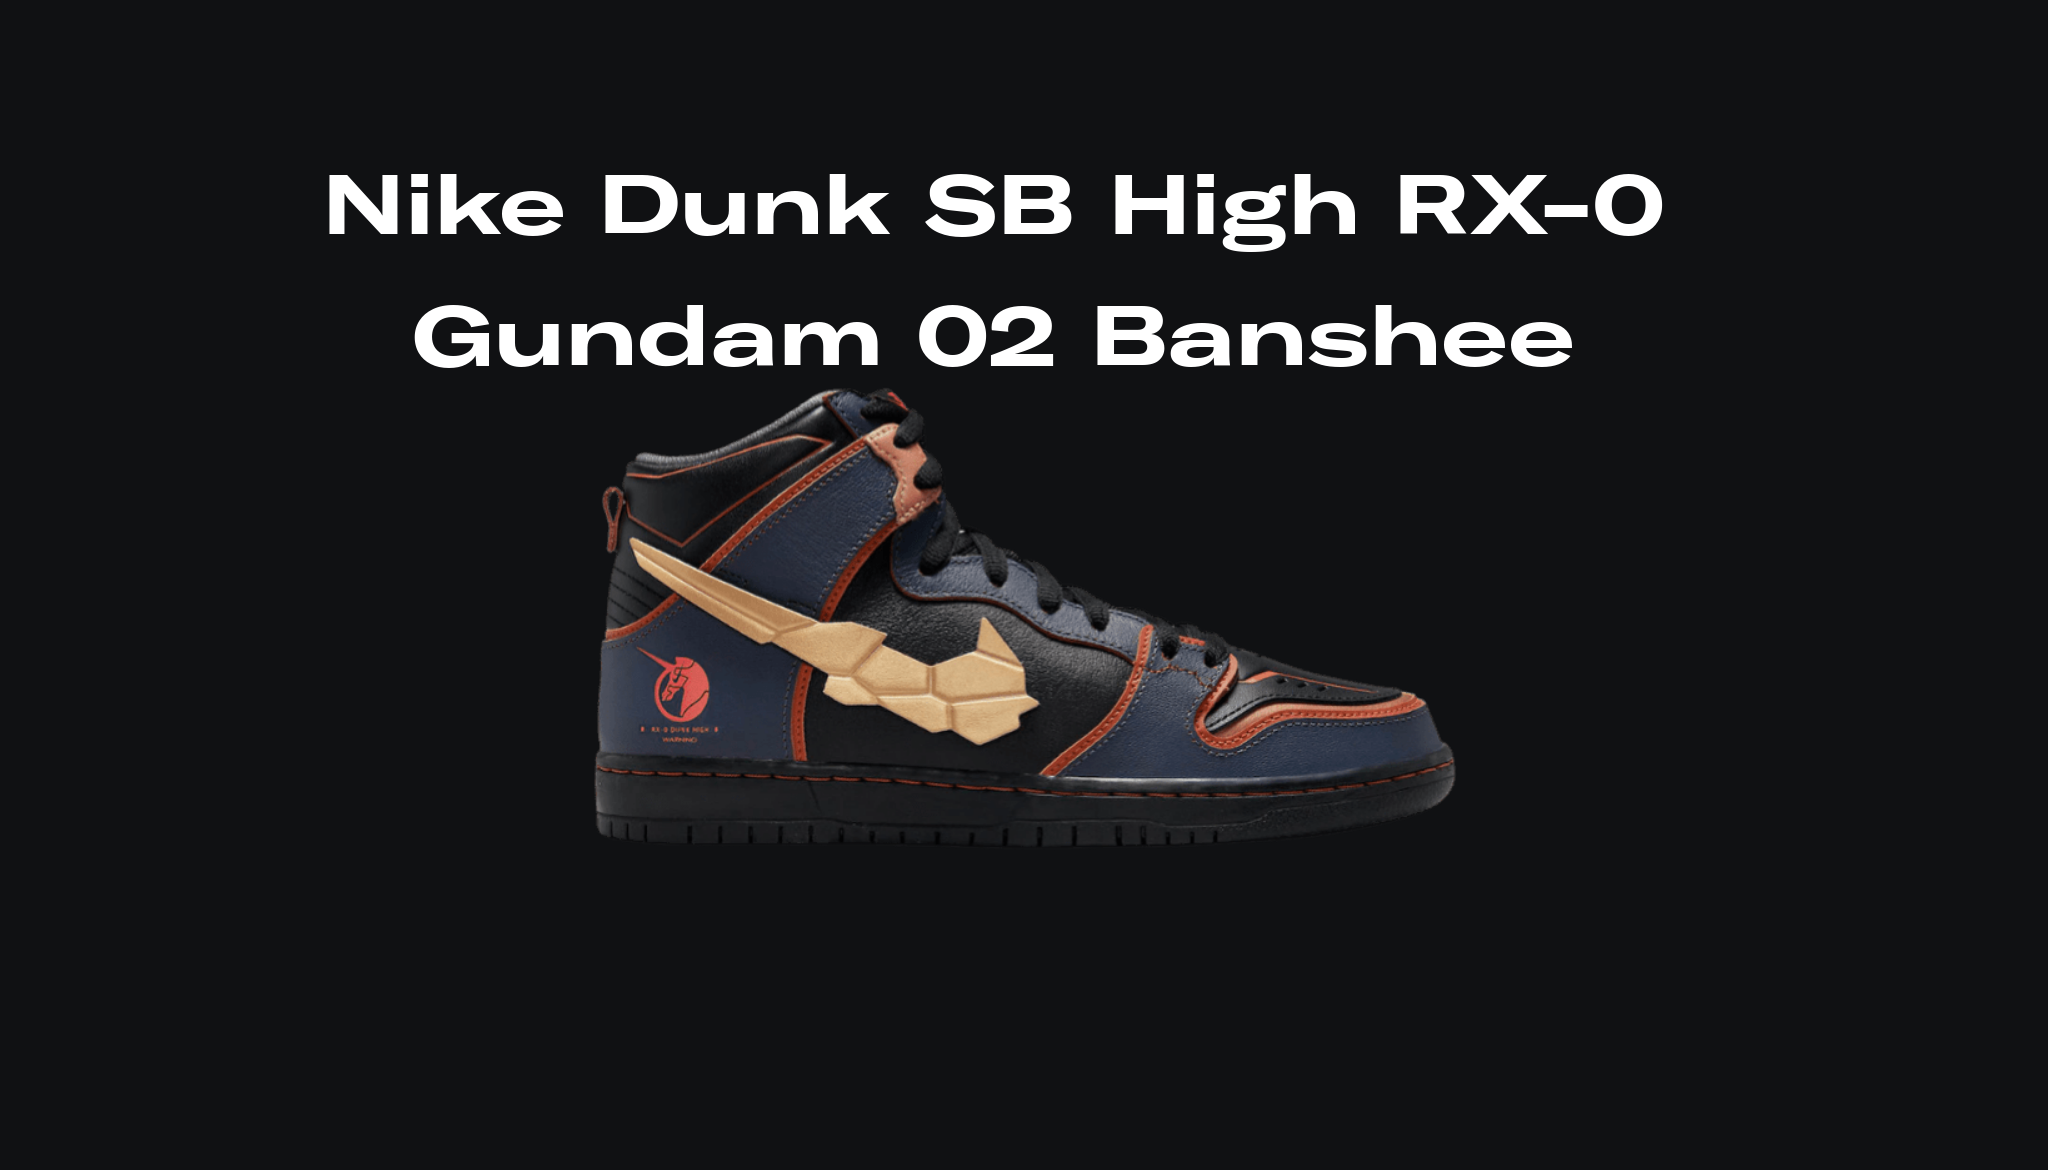 Nike Dunk SB High RX-0 Gundam 02 Banshee, Raffles and Release Date 